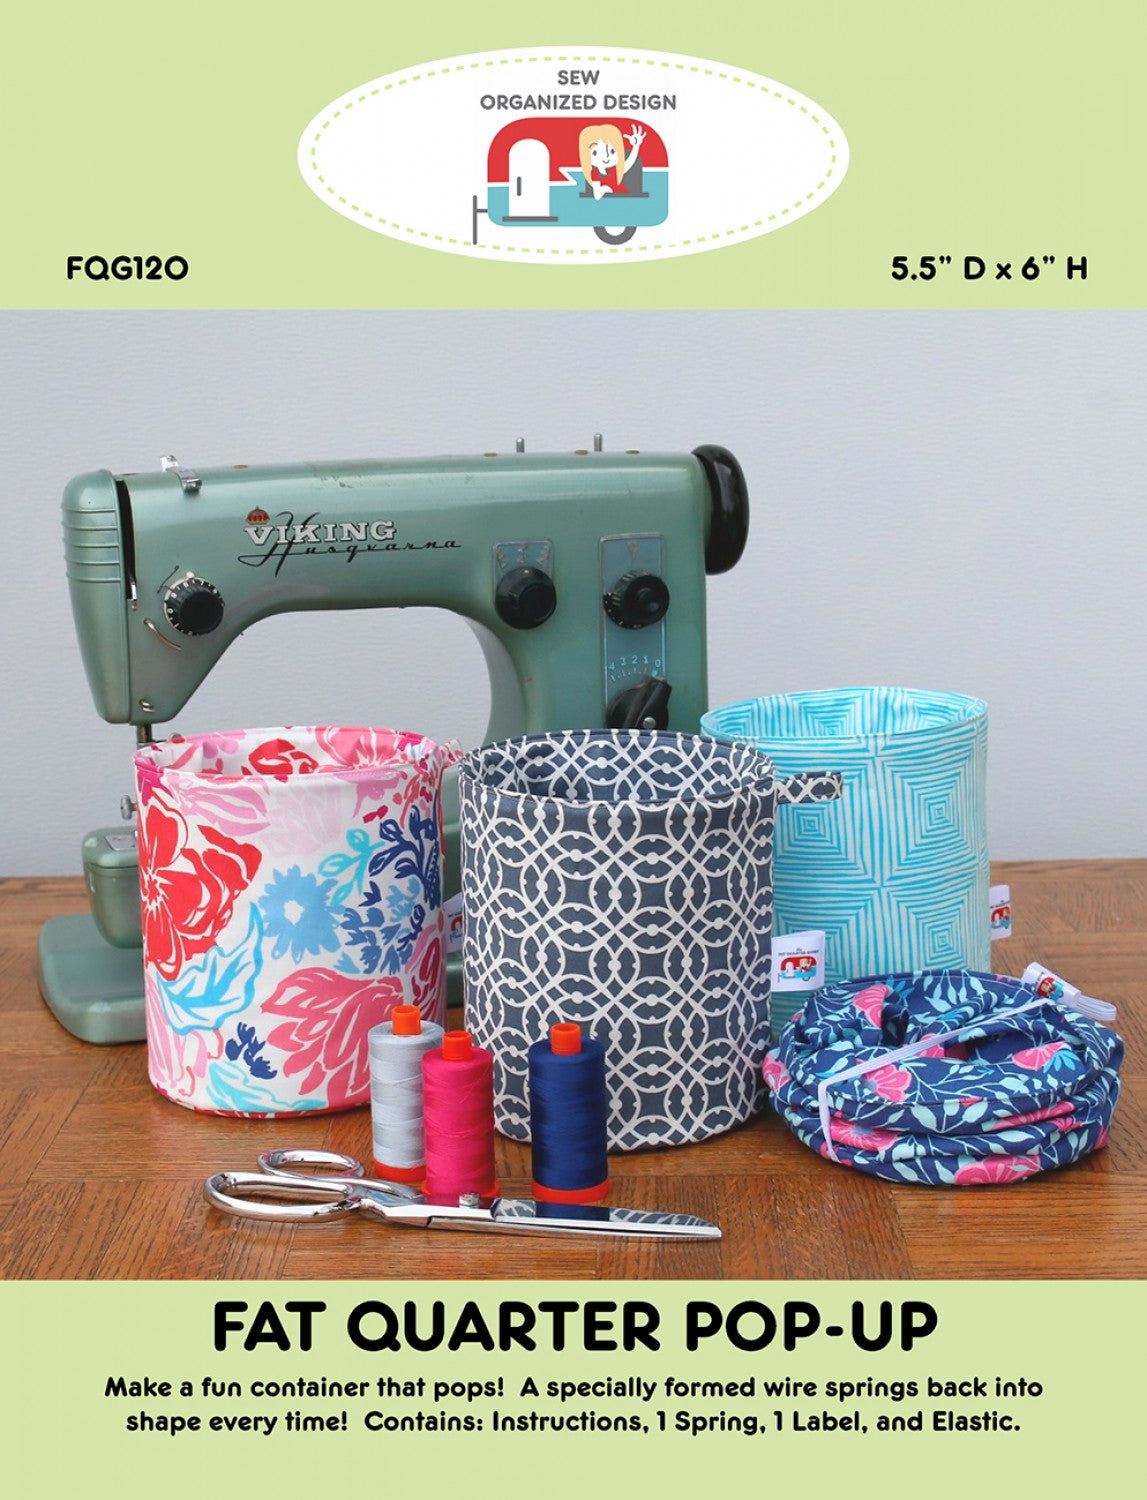 Fat Quarter Pop-Up Pattern by Joanne Hillestad for Sew Organized Design